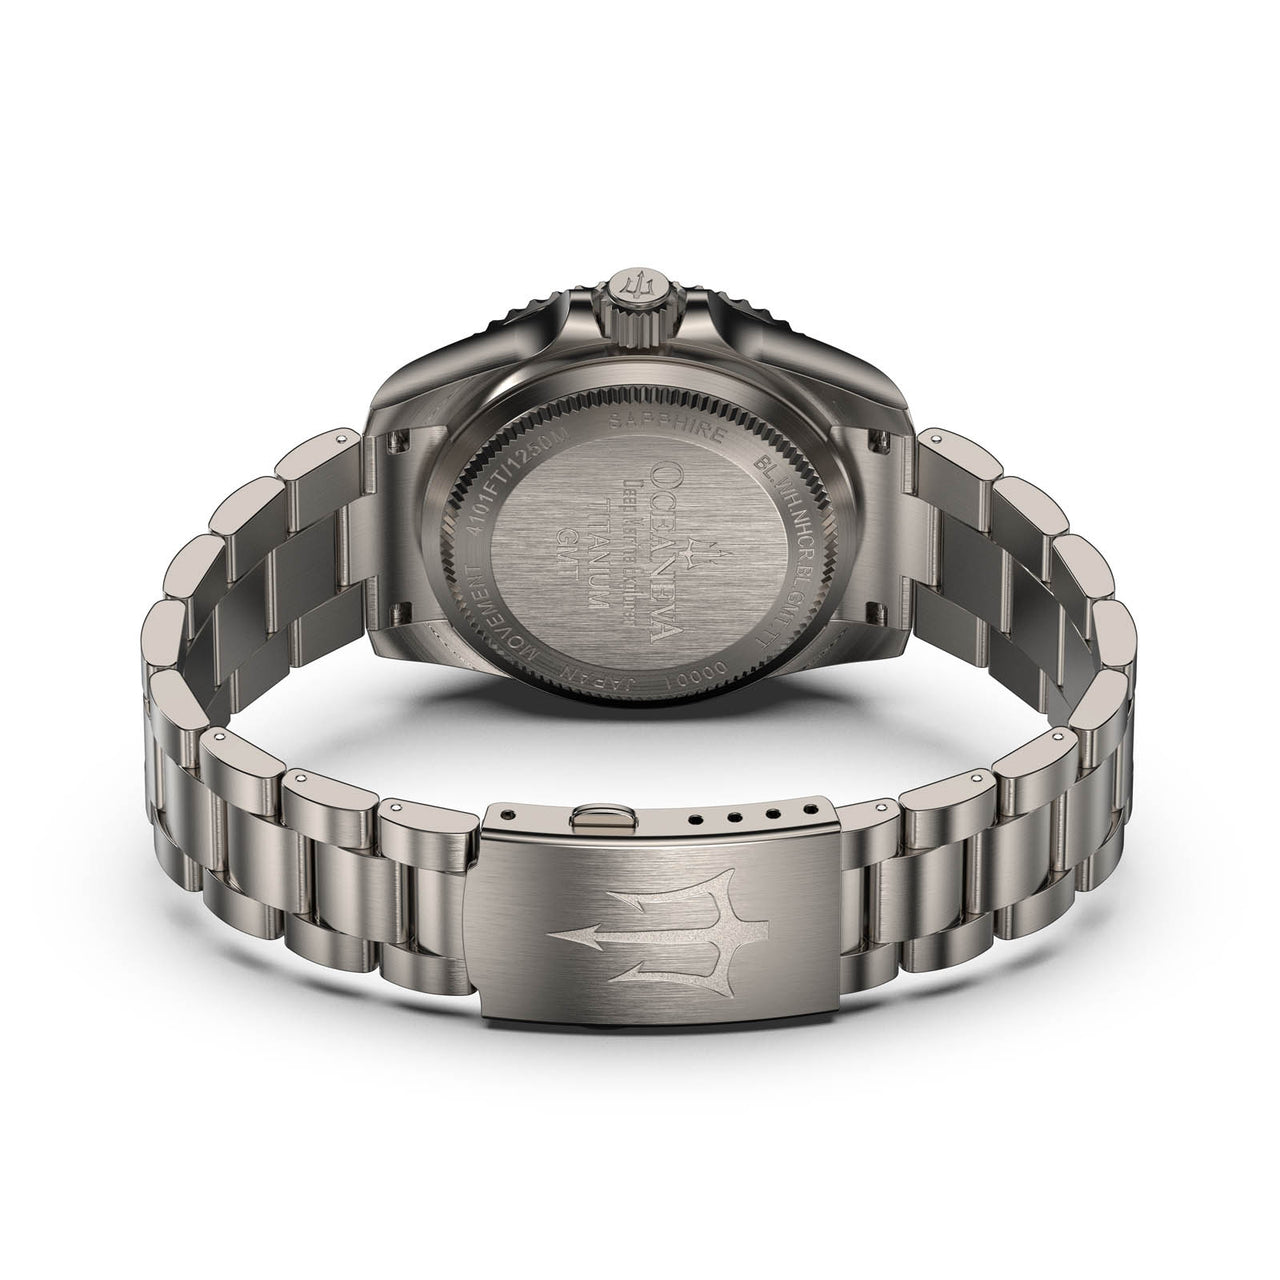 Oceaneva™ Men's GMT TITANIUM Automatic Deep Marine Explorer 1250M Blue & White Ceramic Bezel Watch